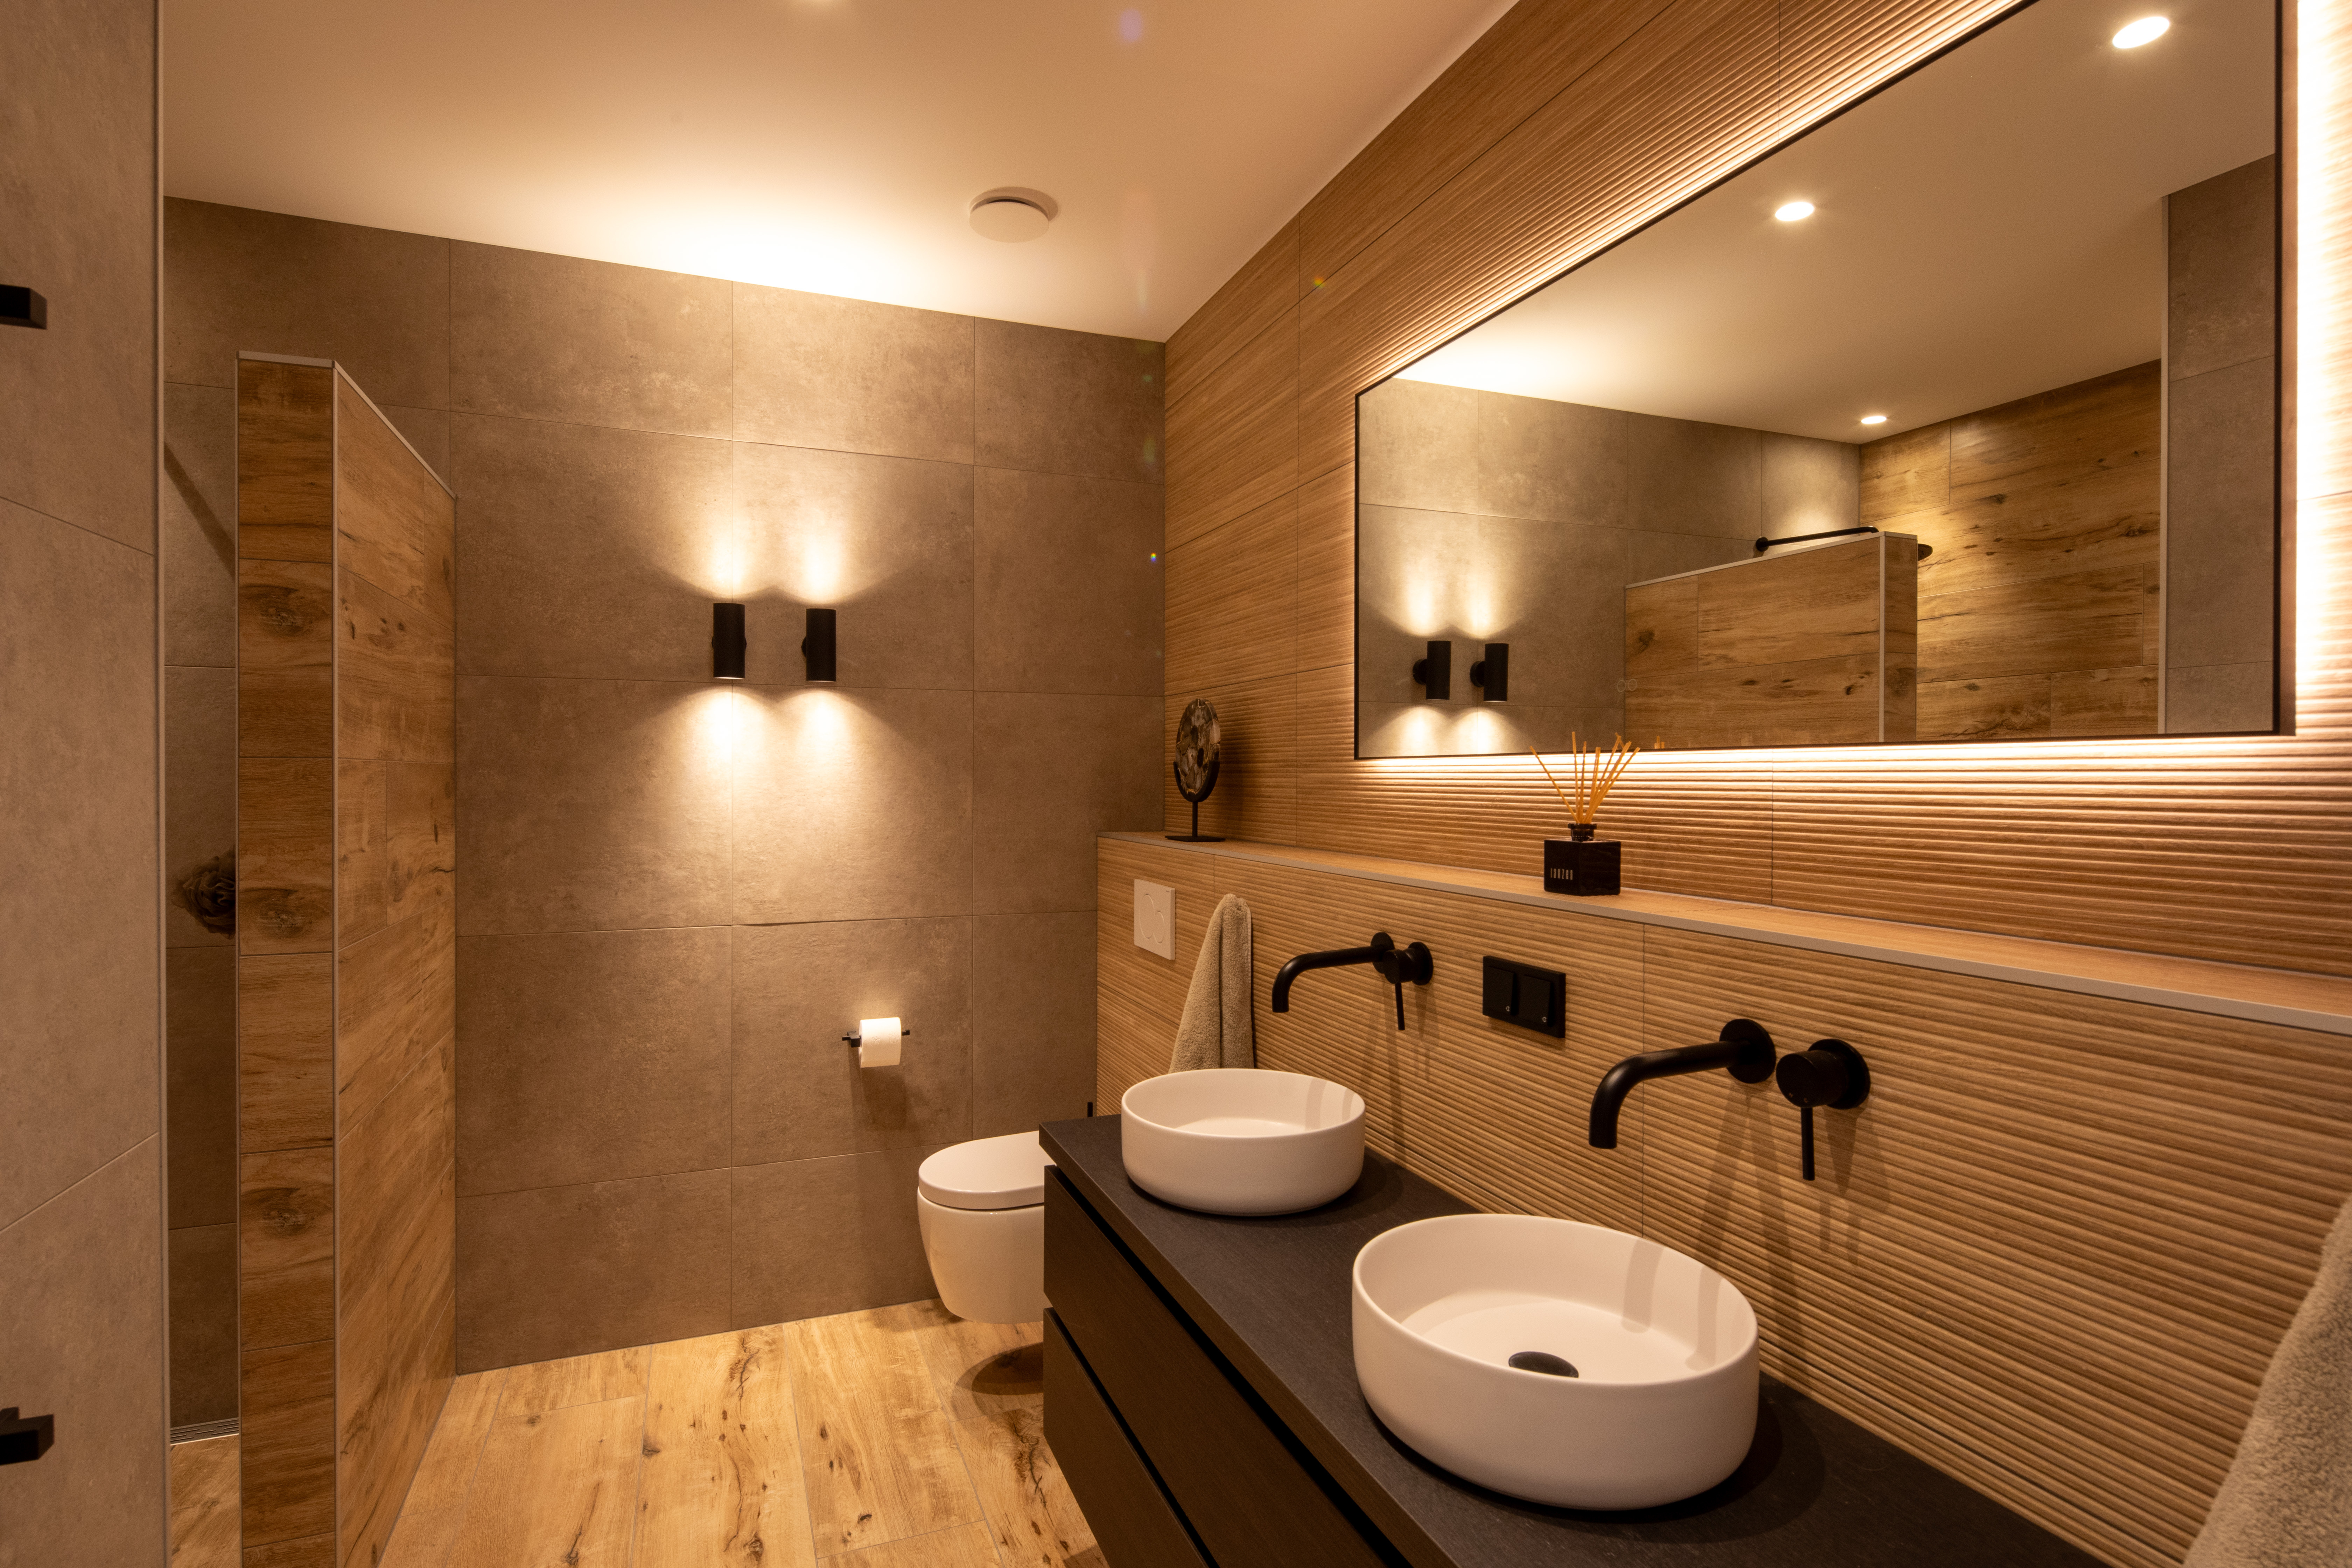 Badkamer met spanplafond en verlichting